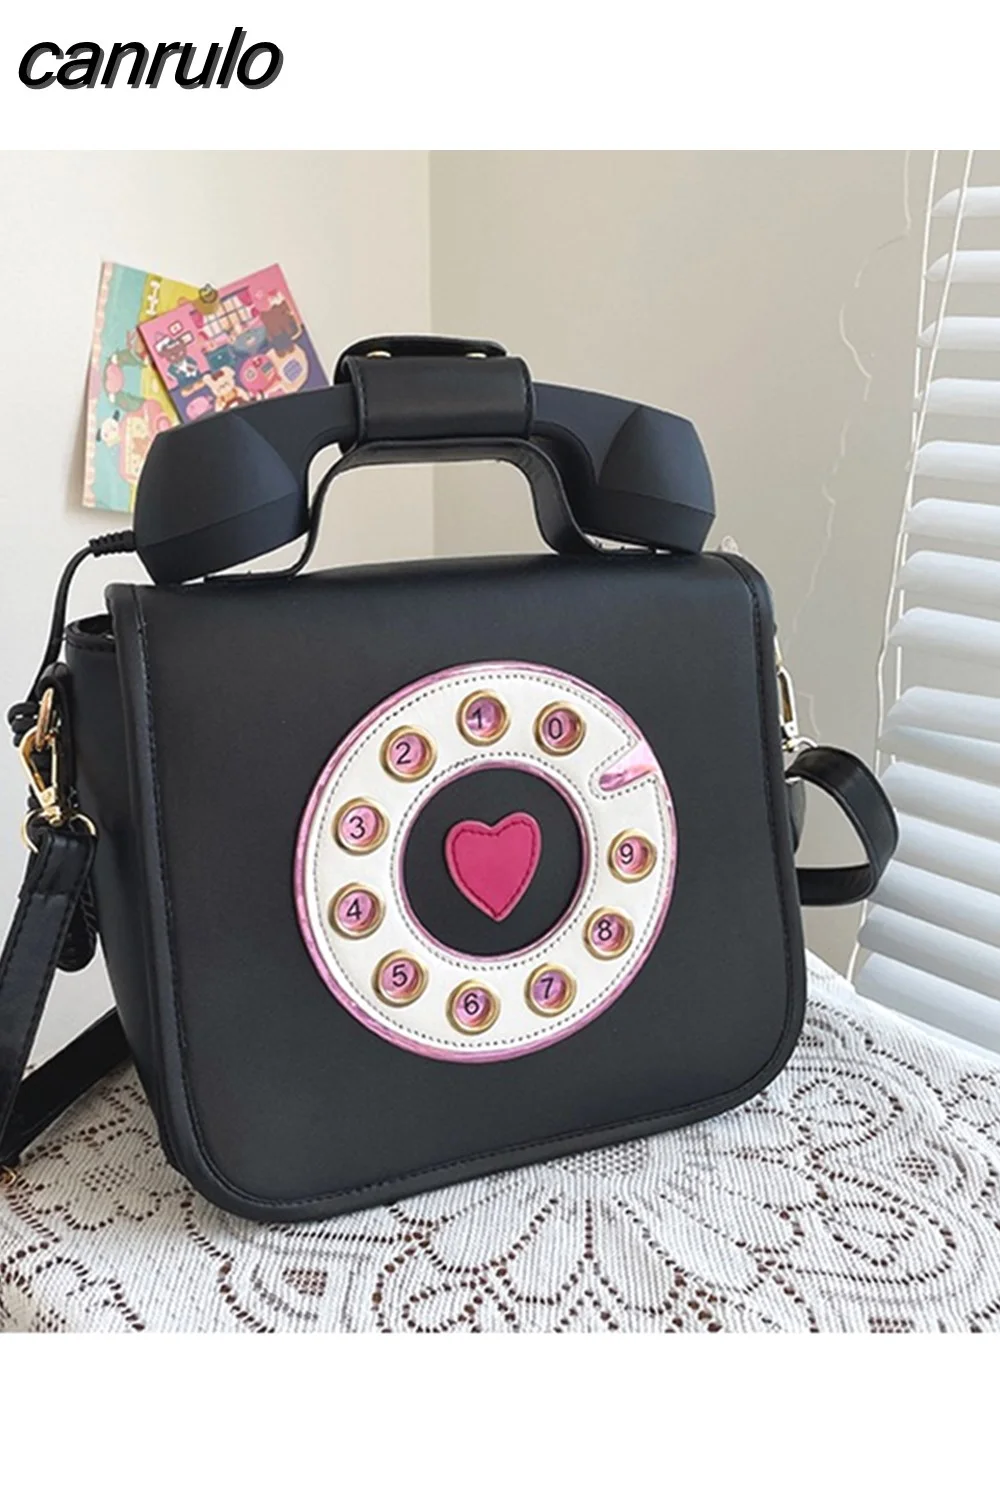 canrulo new trend women spring handbags phone Kawaii PU Leather Cute originality fashion designer school Casual Sweet girls‘s bags